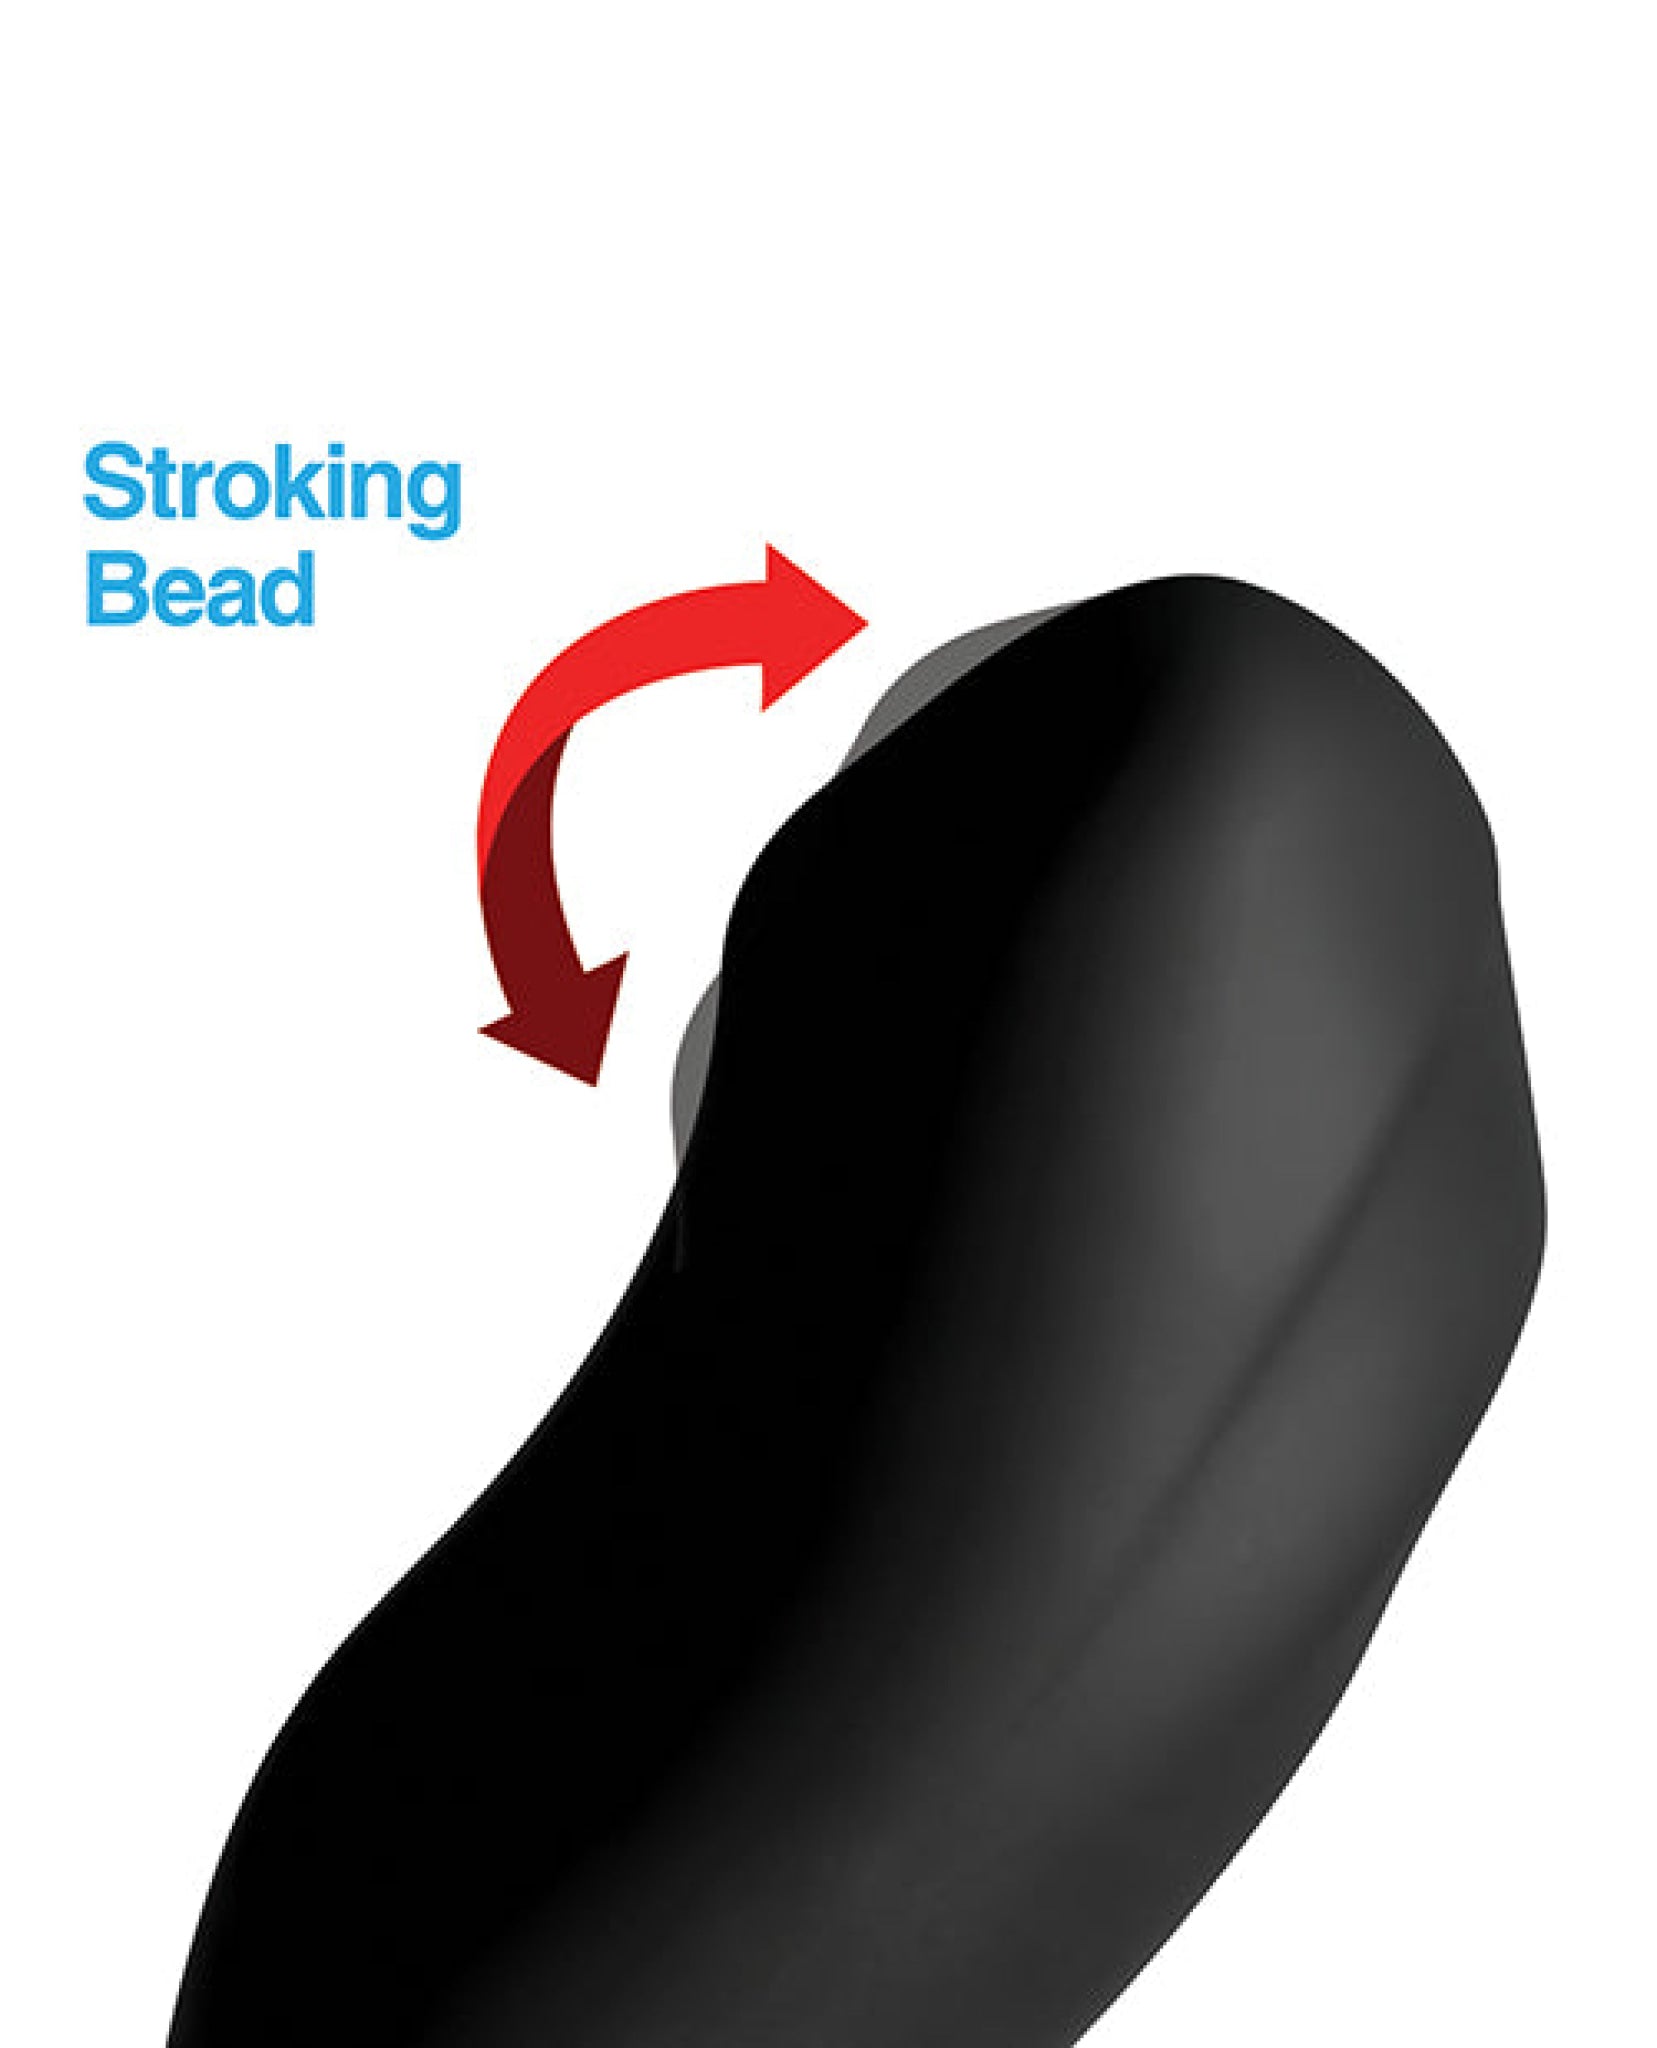 7X Bendable Prostate Stimulator with Stroking Bead Xr LLC